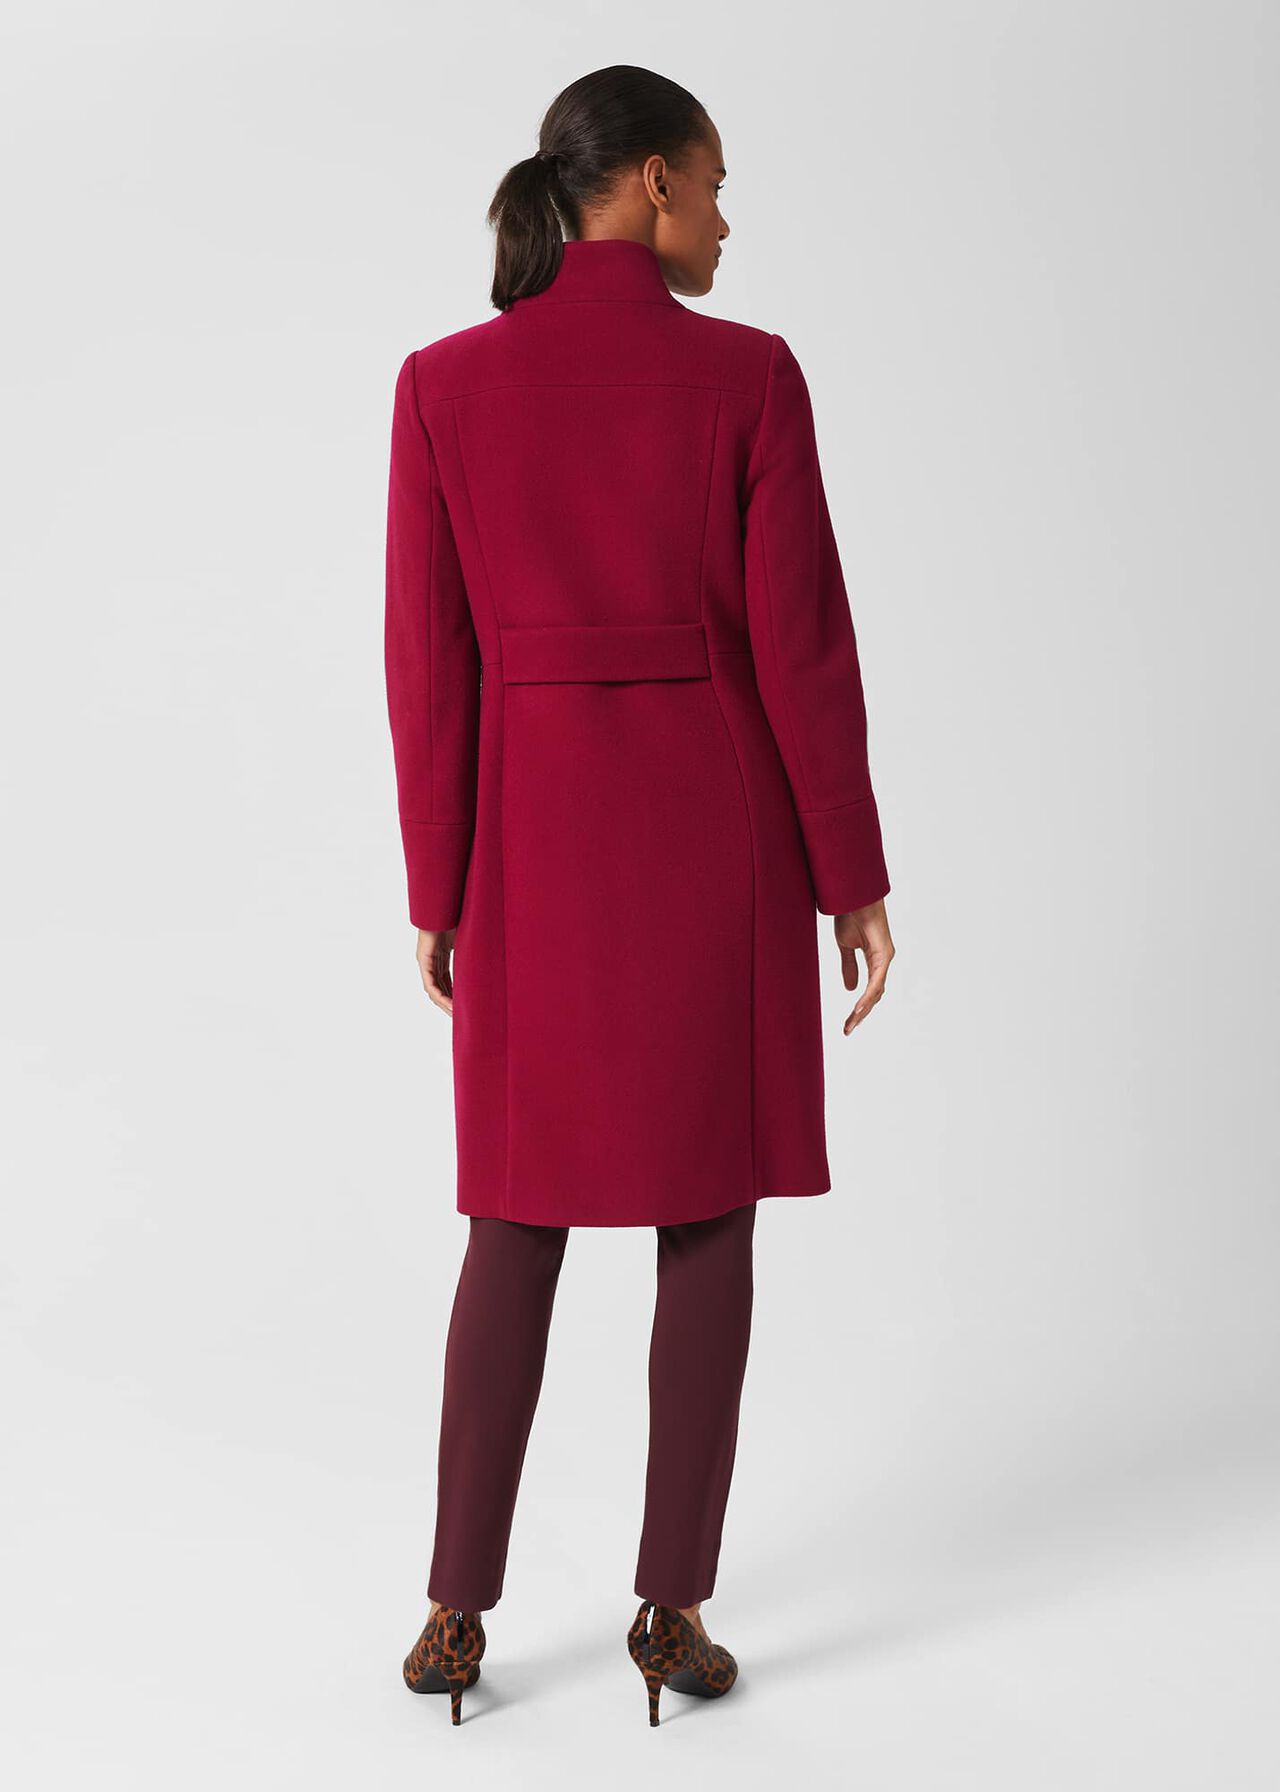 Maisie Wool Blend Coat, Dark Raspberry, hi-res